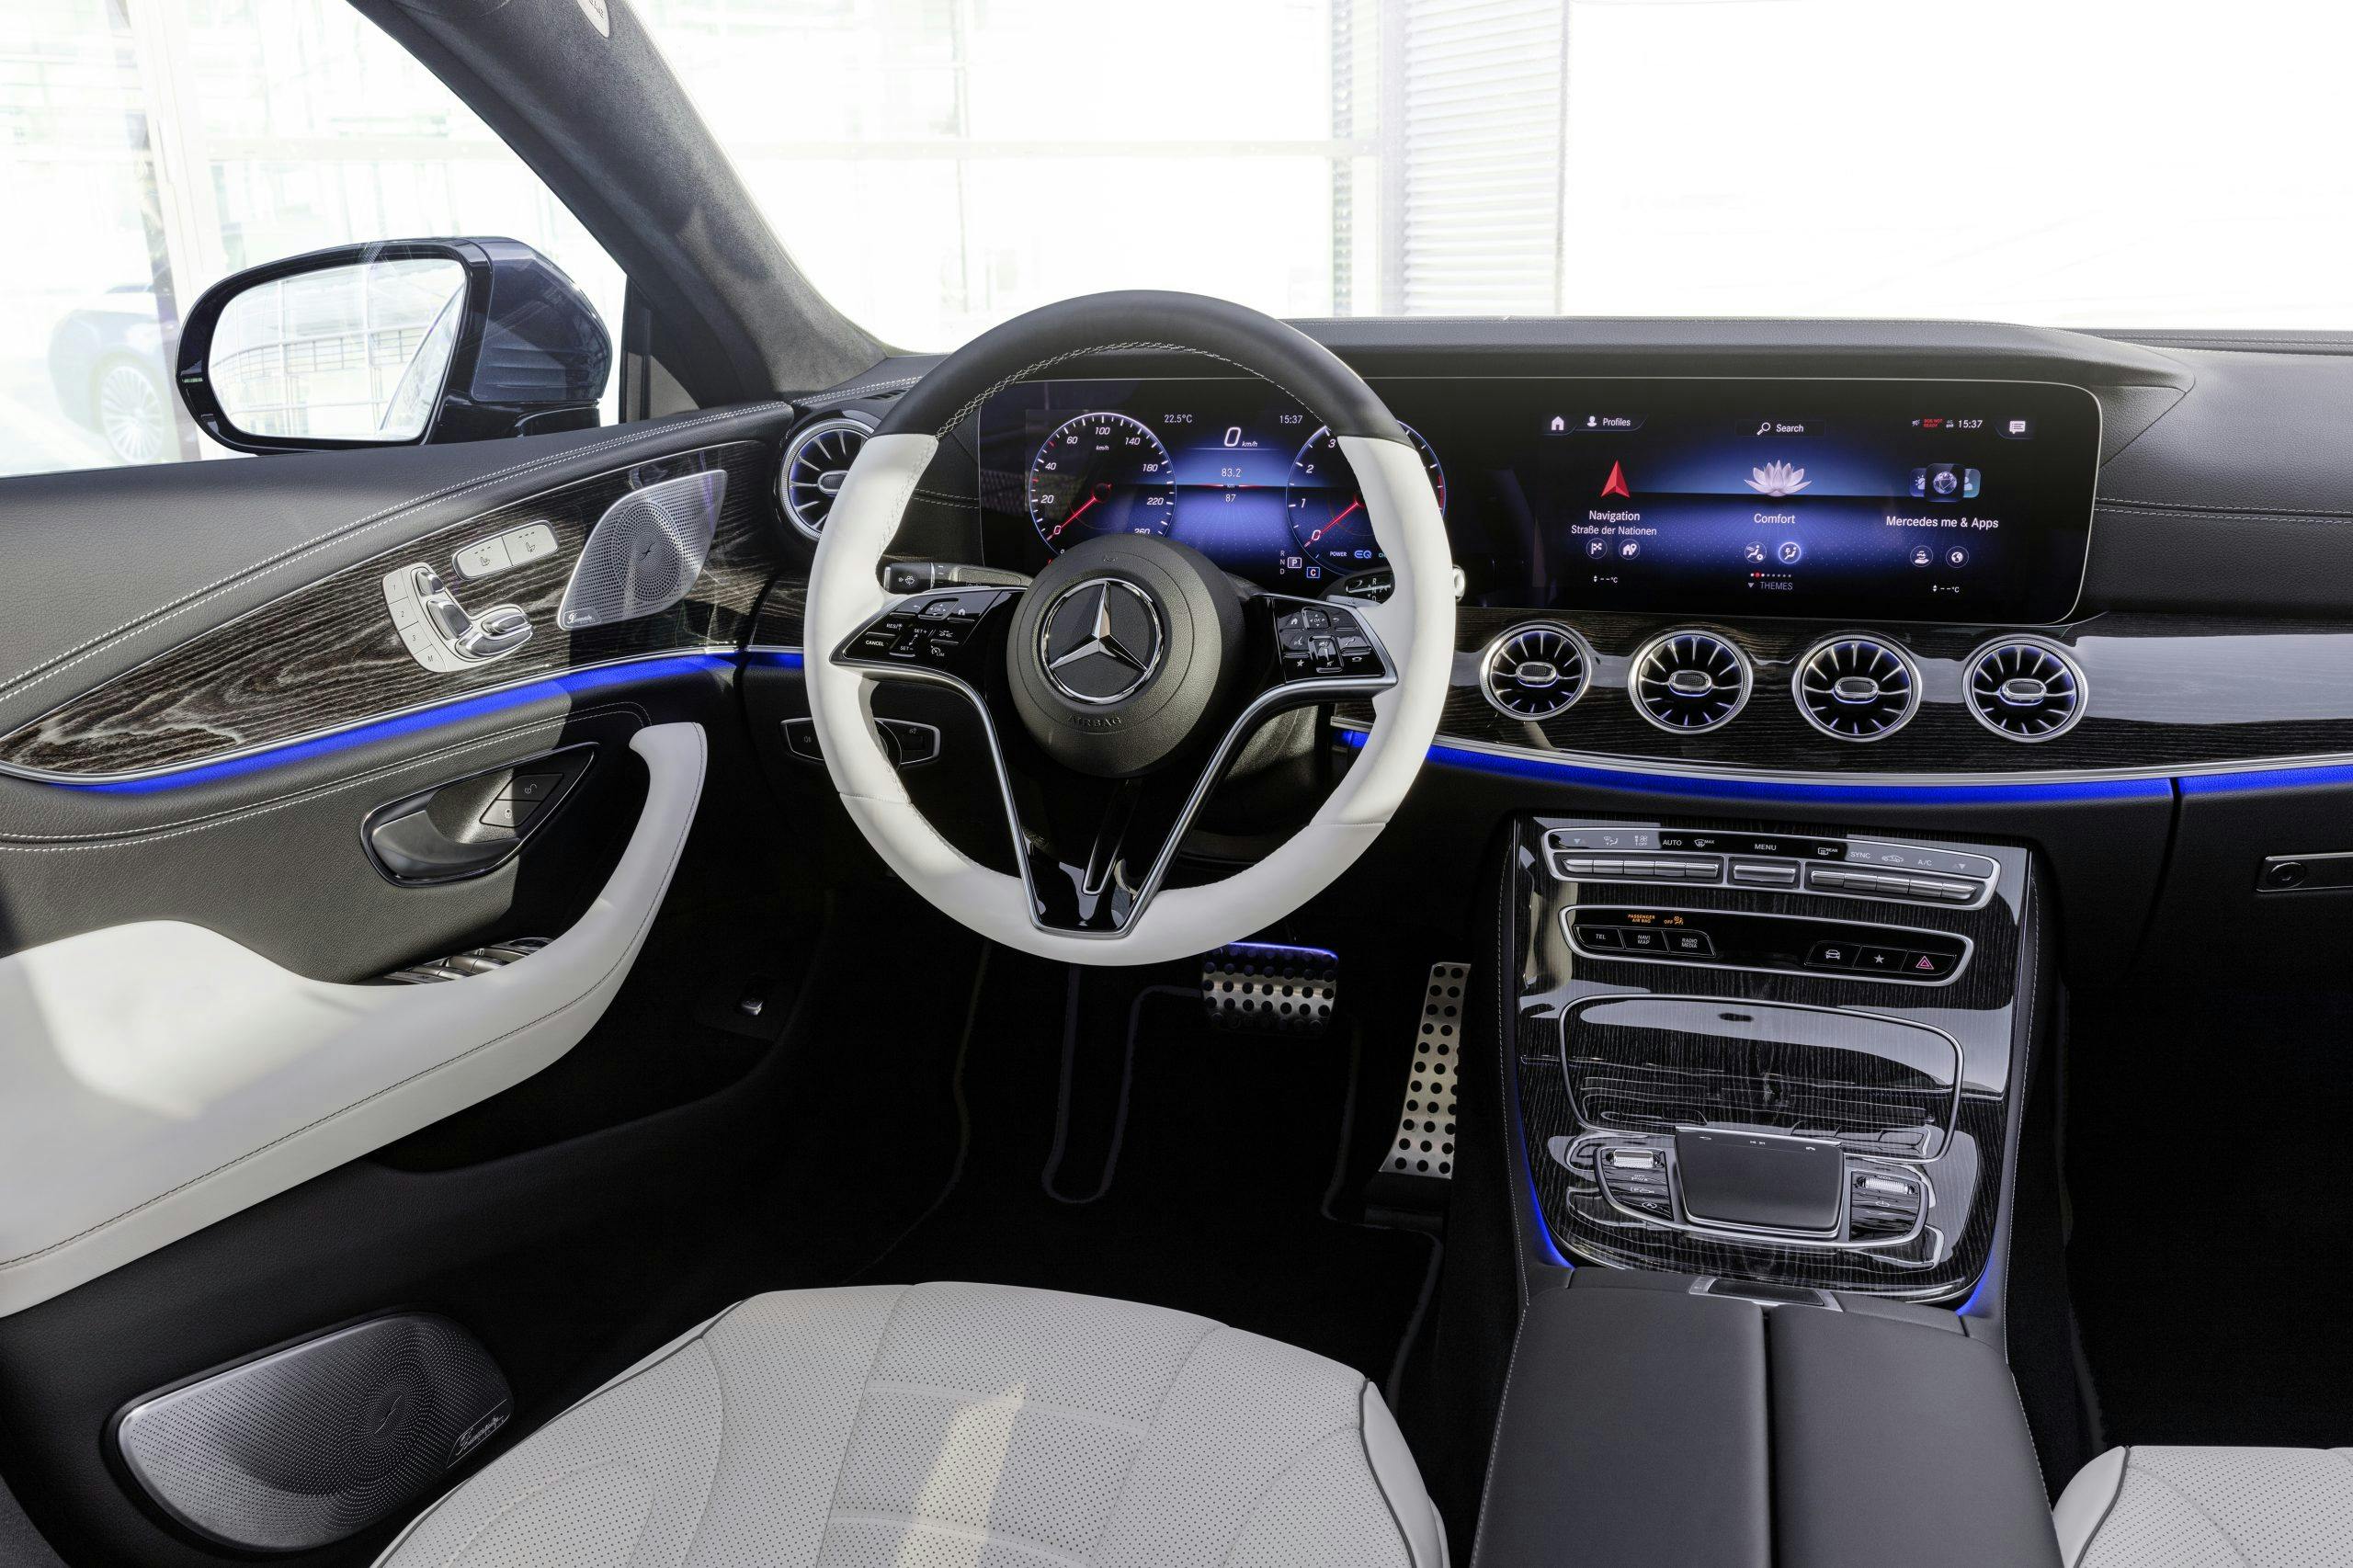 2021 Mercedes-Benz CLS 450 4Matic Coupé interior front cabin